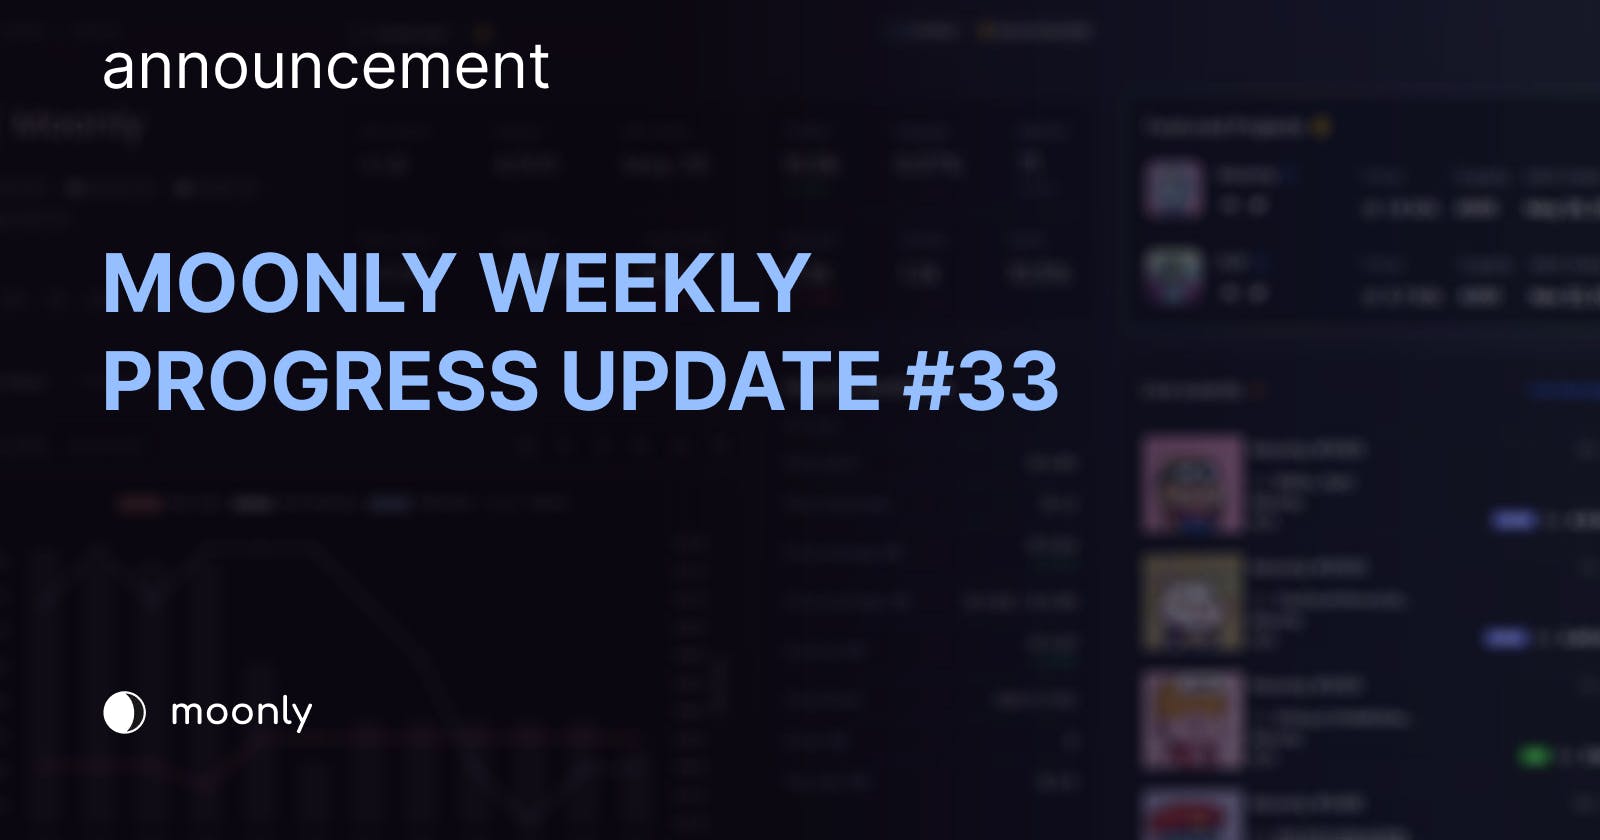 Moonly weekly progress update #33